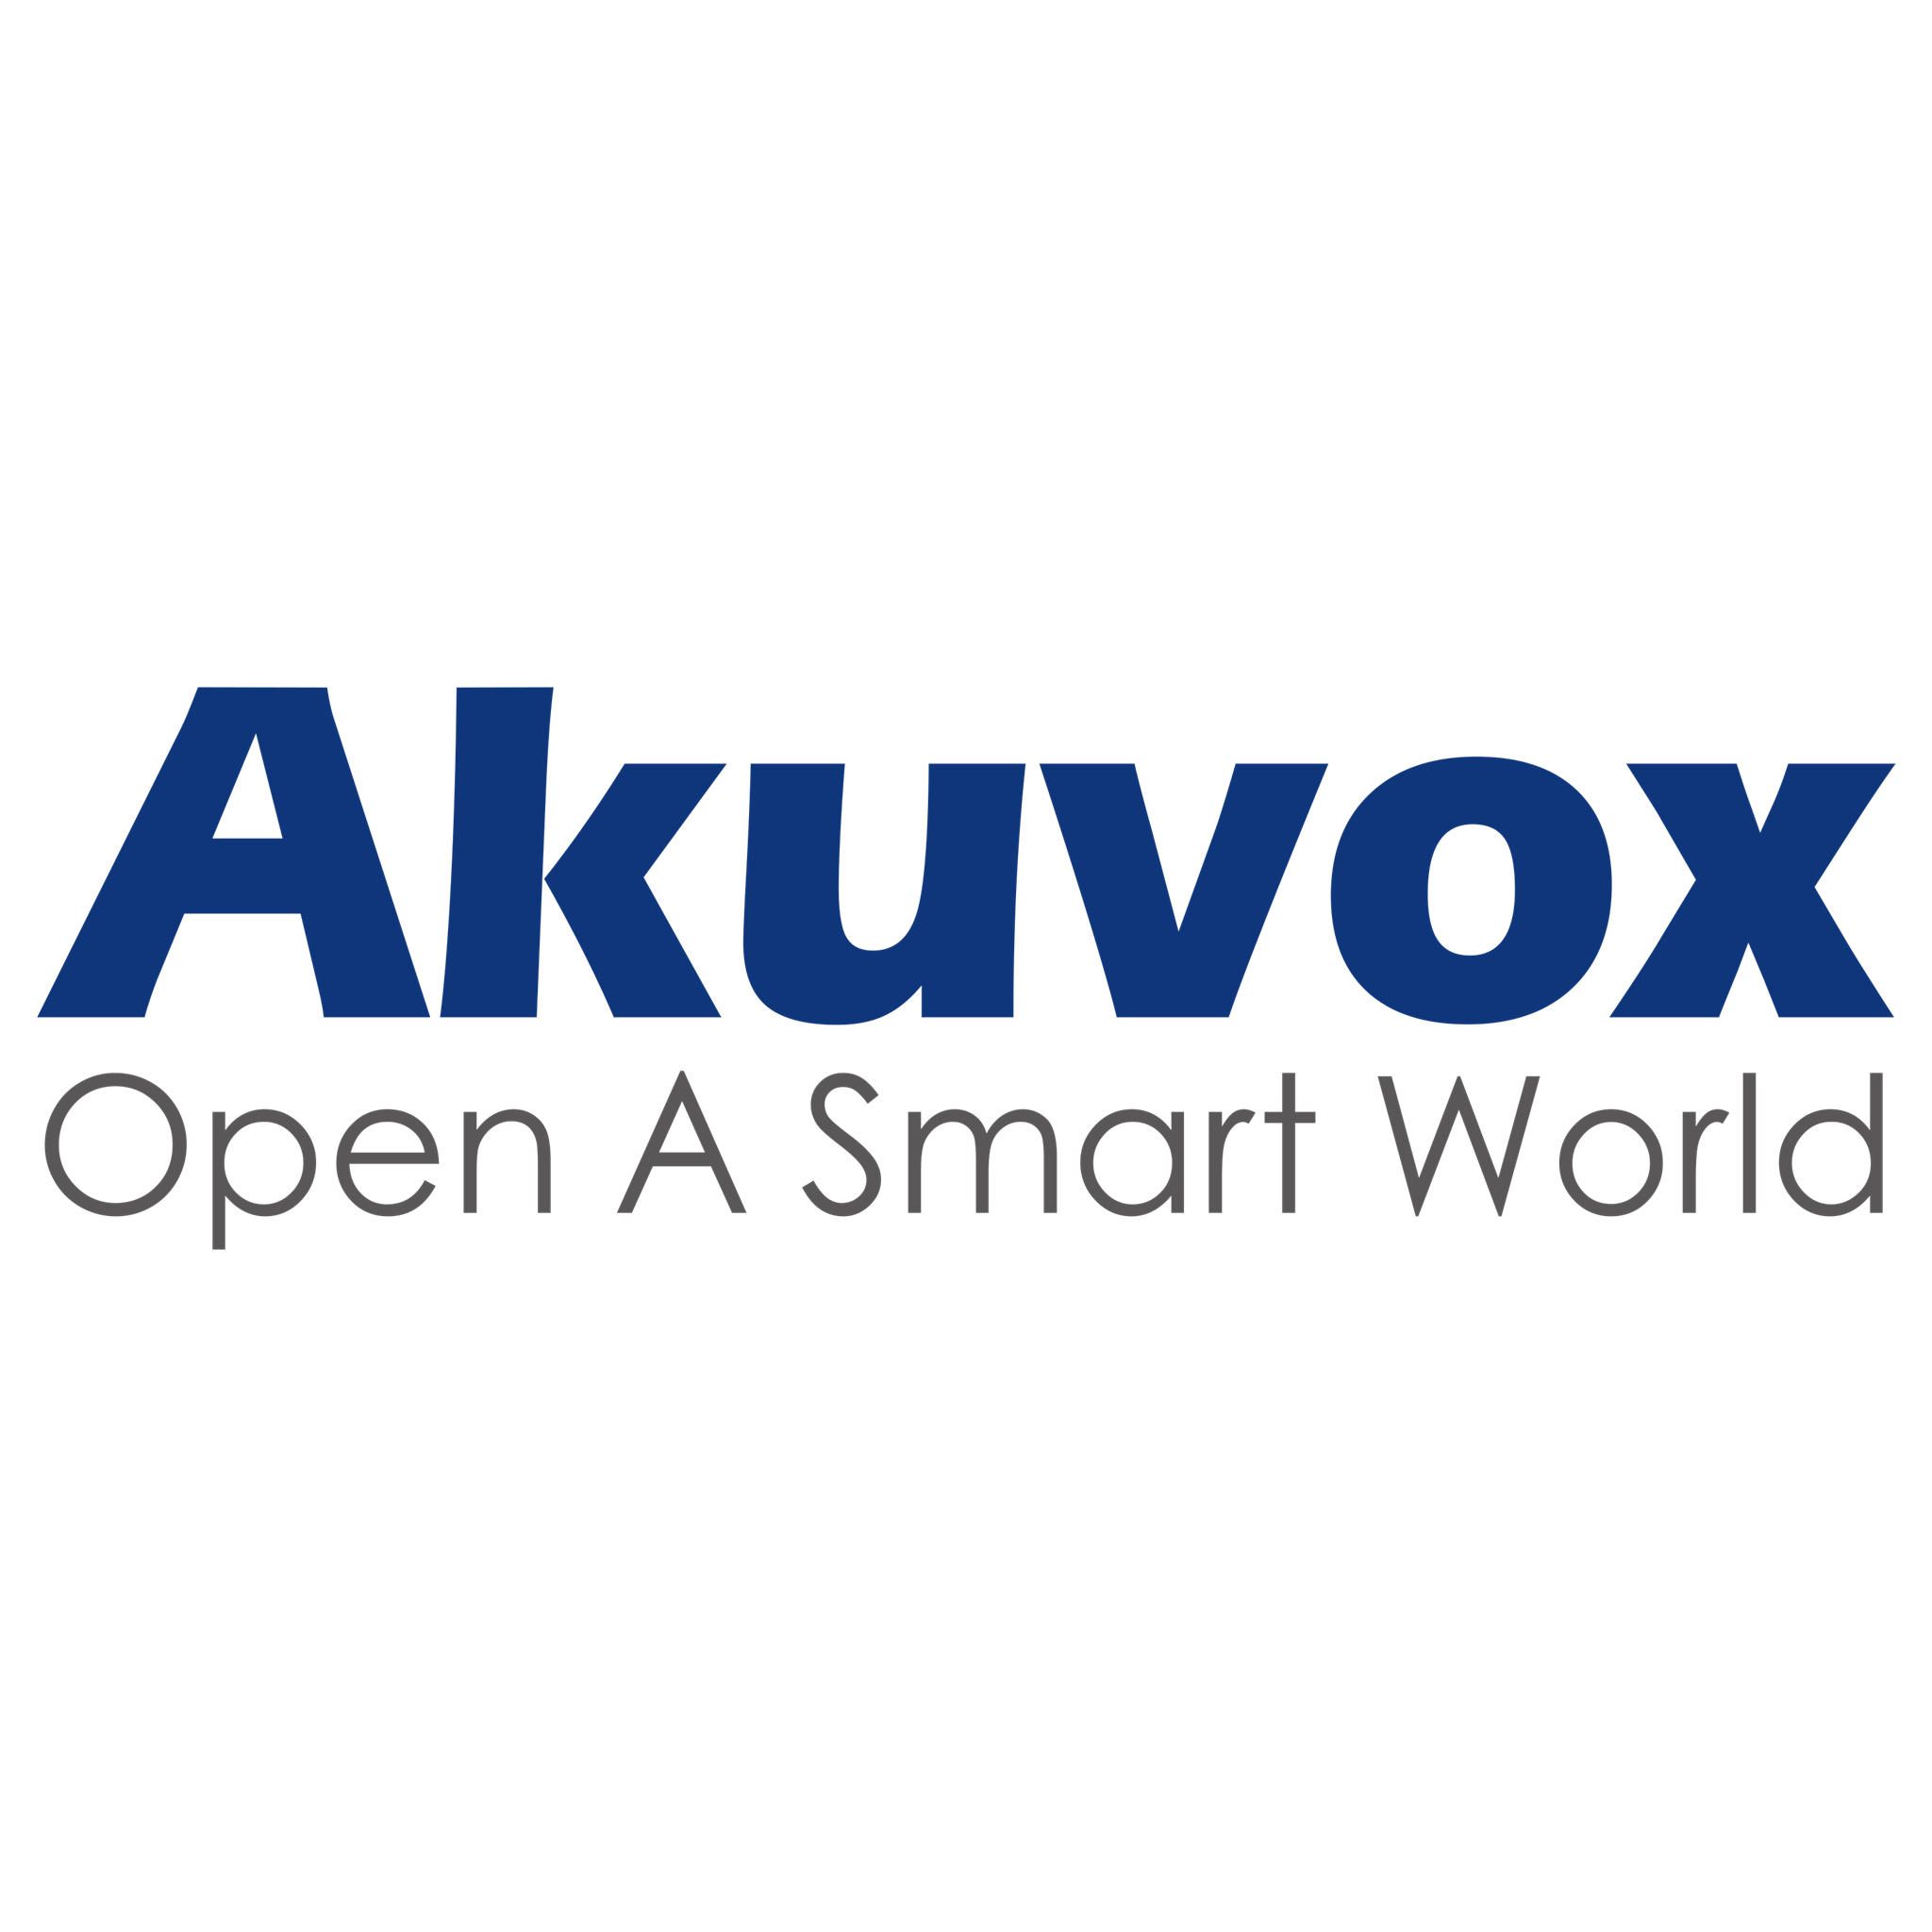 Akuvox Logo